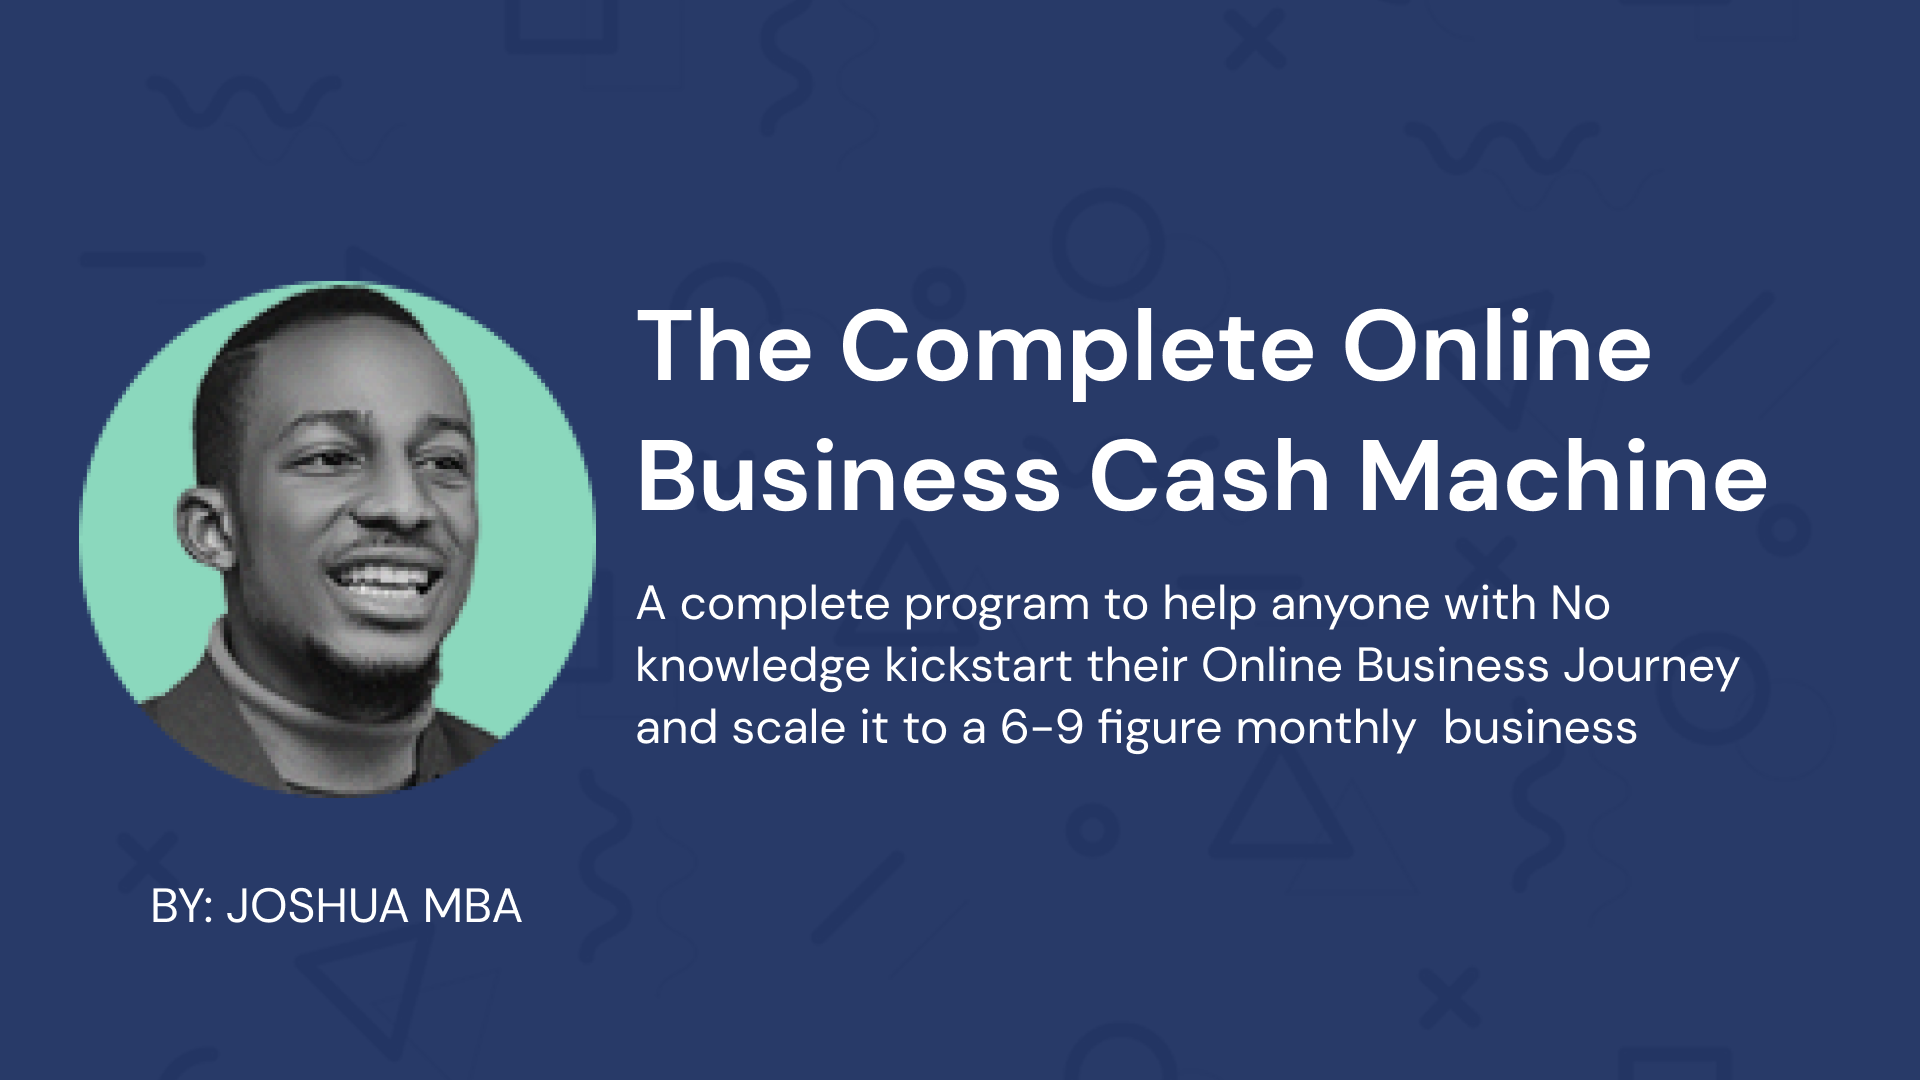 The Complete Online Business Cash Machine [COBCAM]